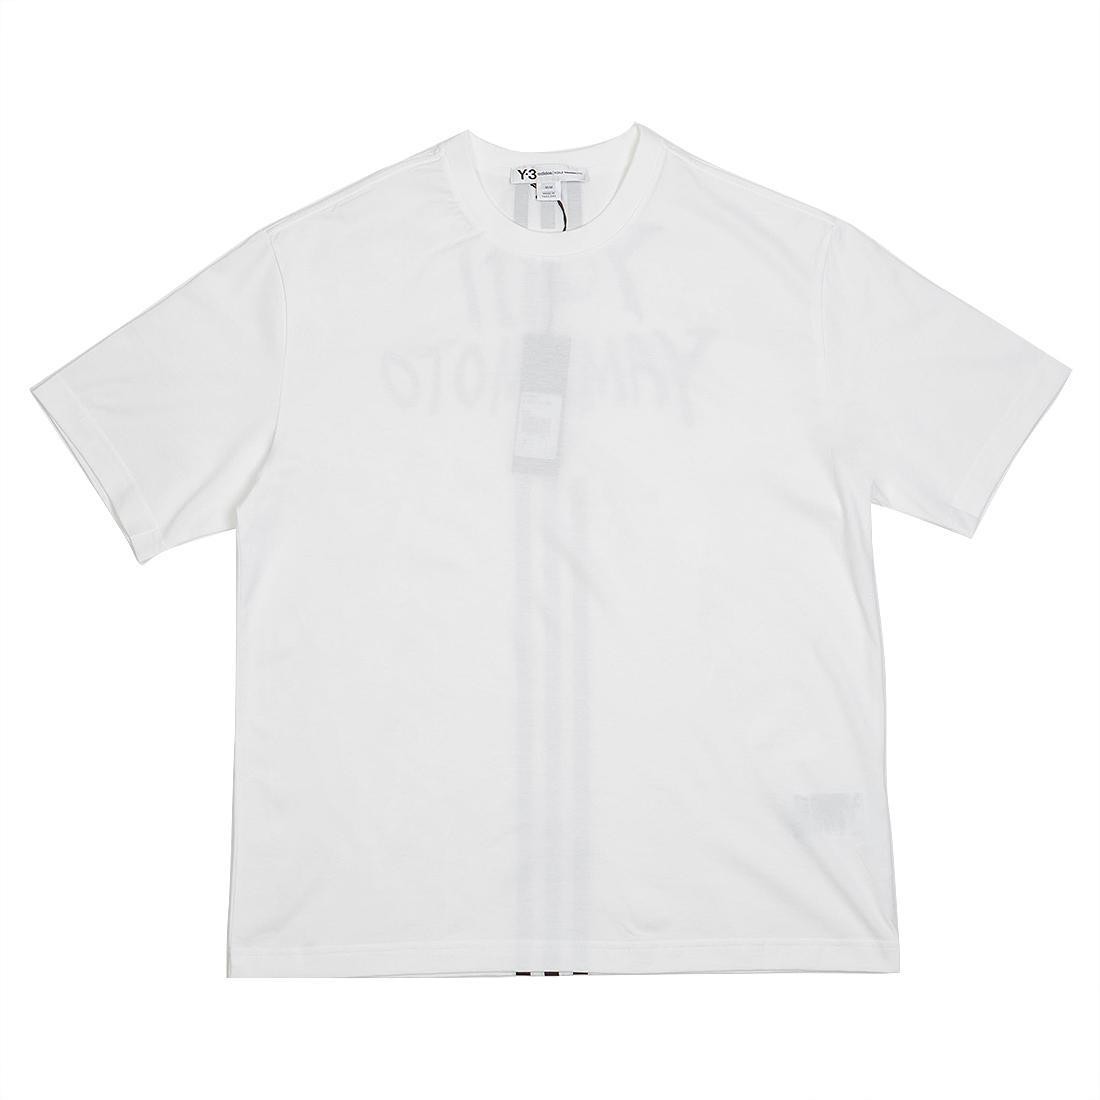 Adidas Y-3 Men Signature Graphic Short Sleeve Tee (white)